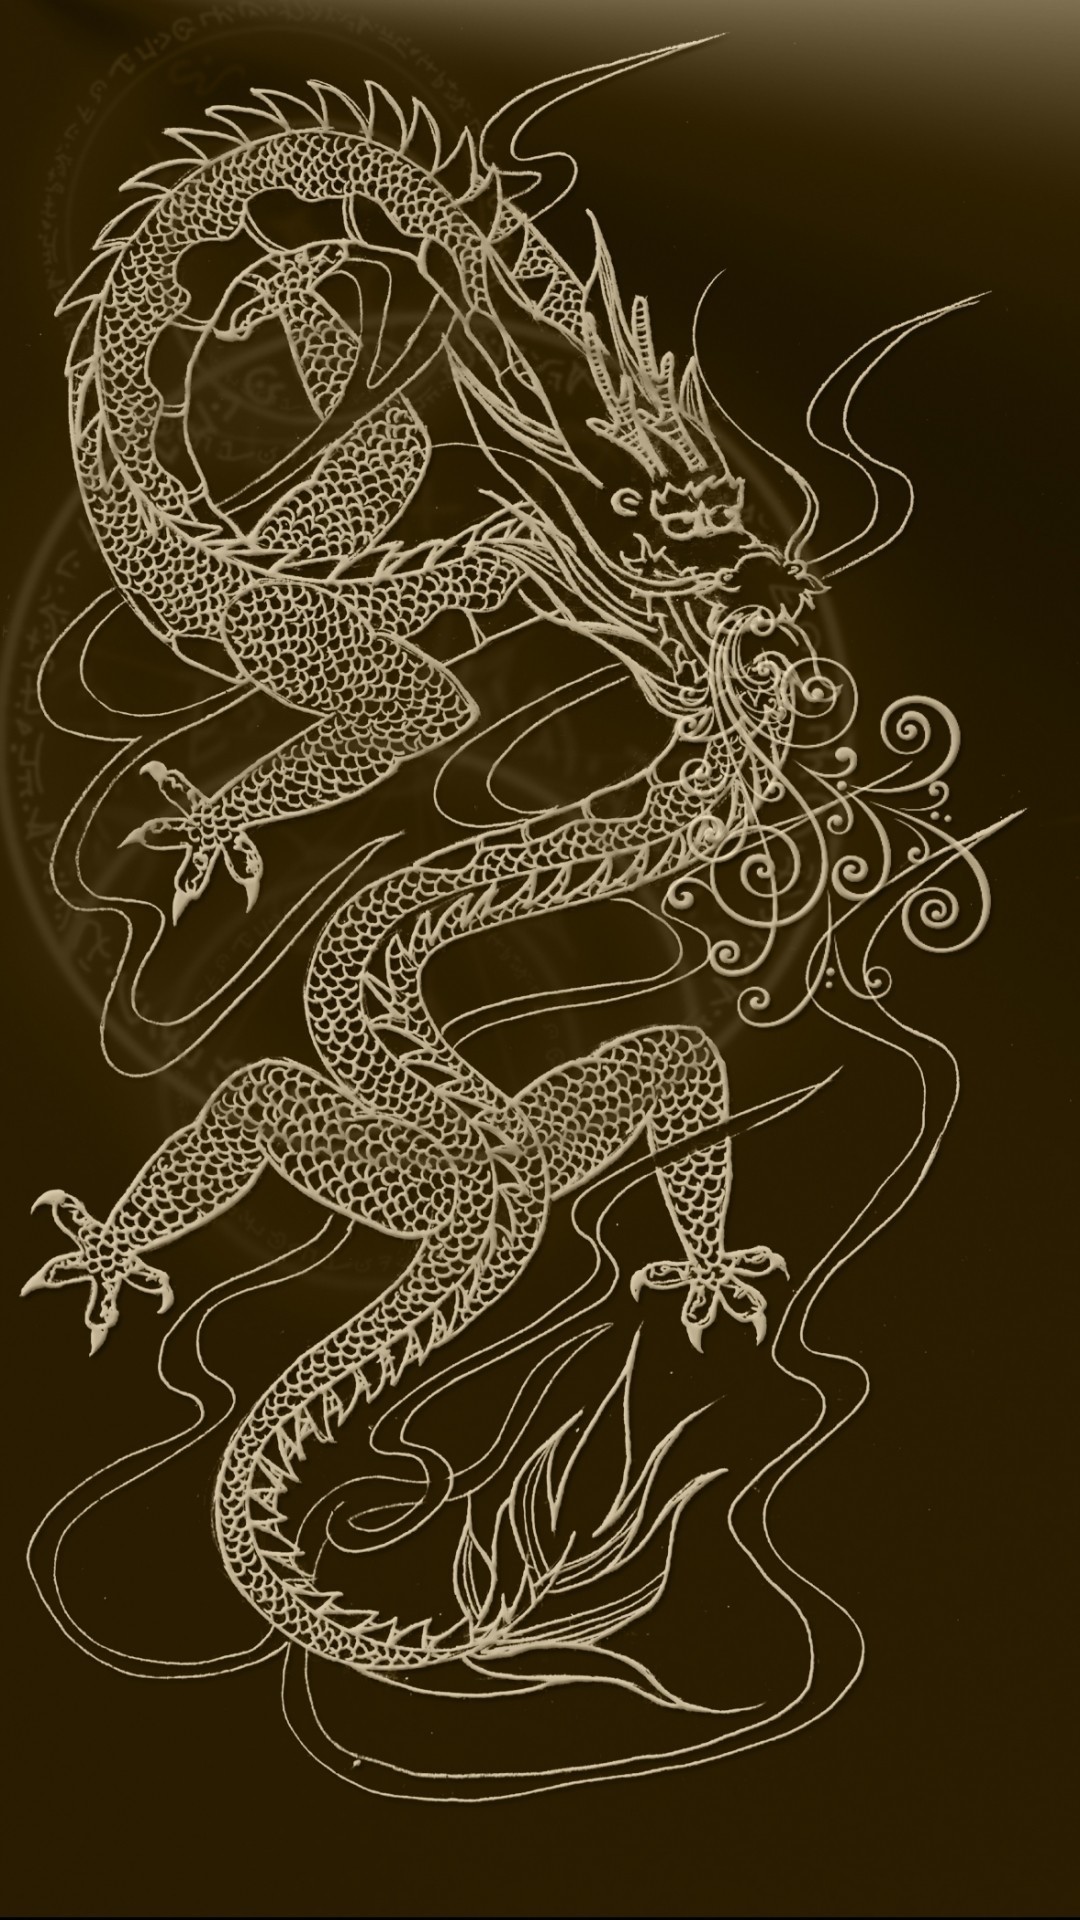 Dragon screensaver wallpaper